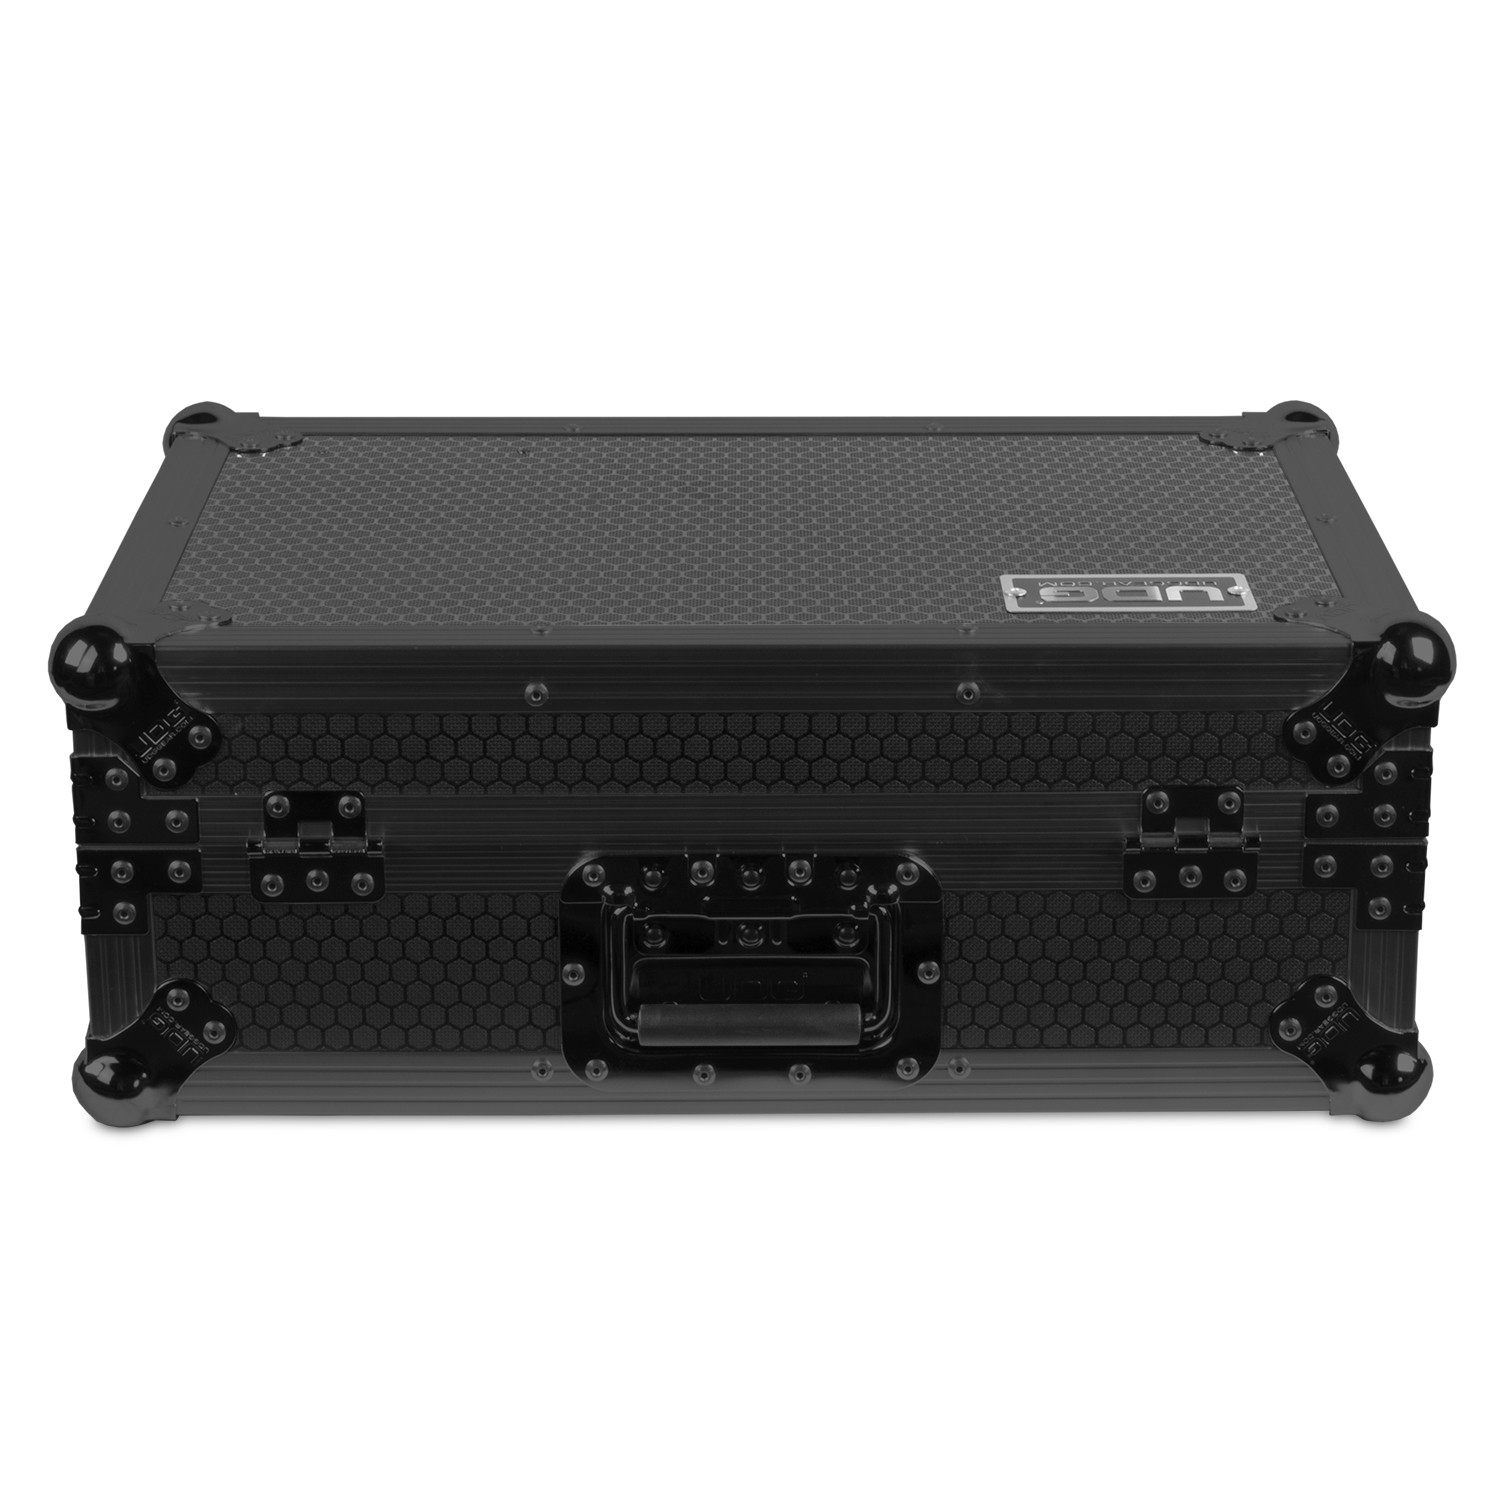 UDG SC5000-X1800 case U91041BL